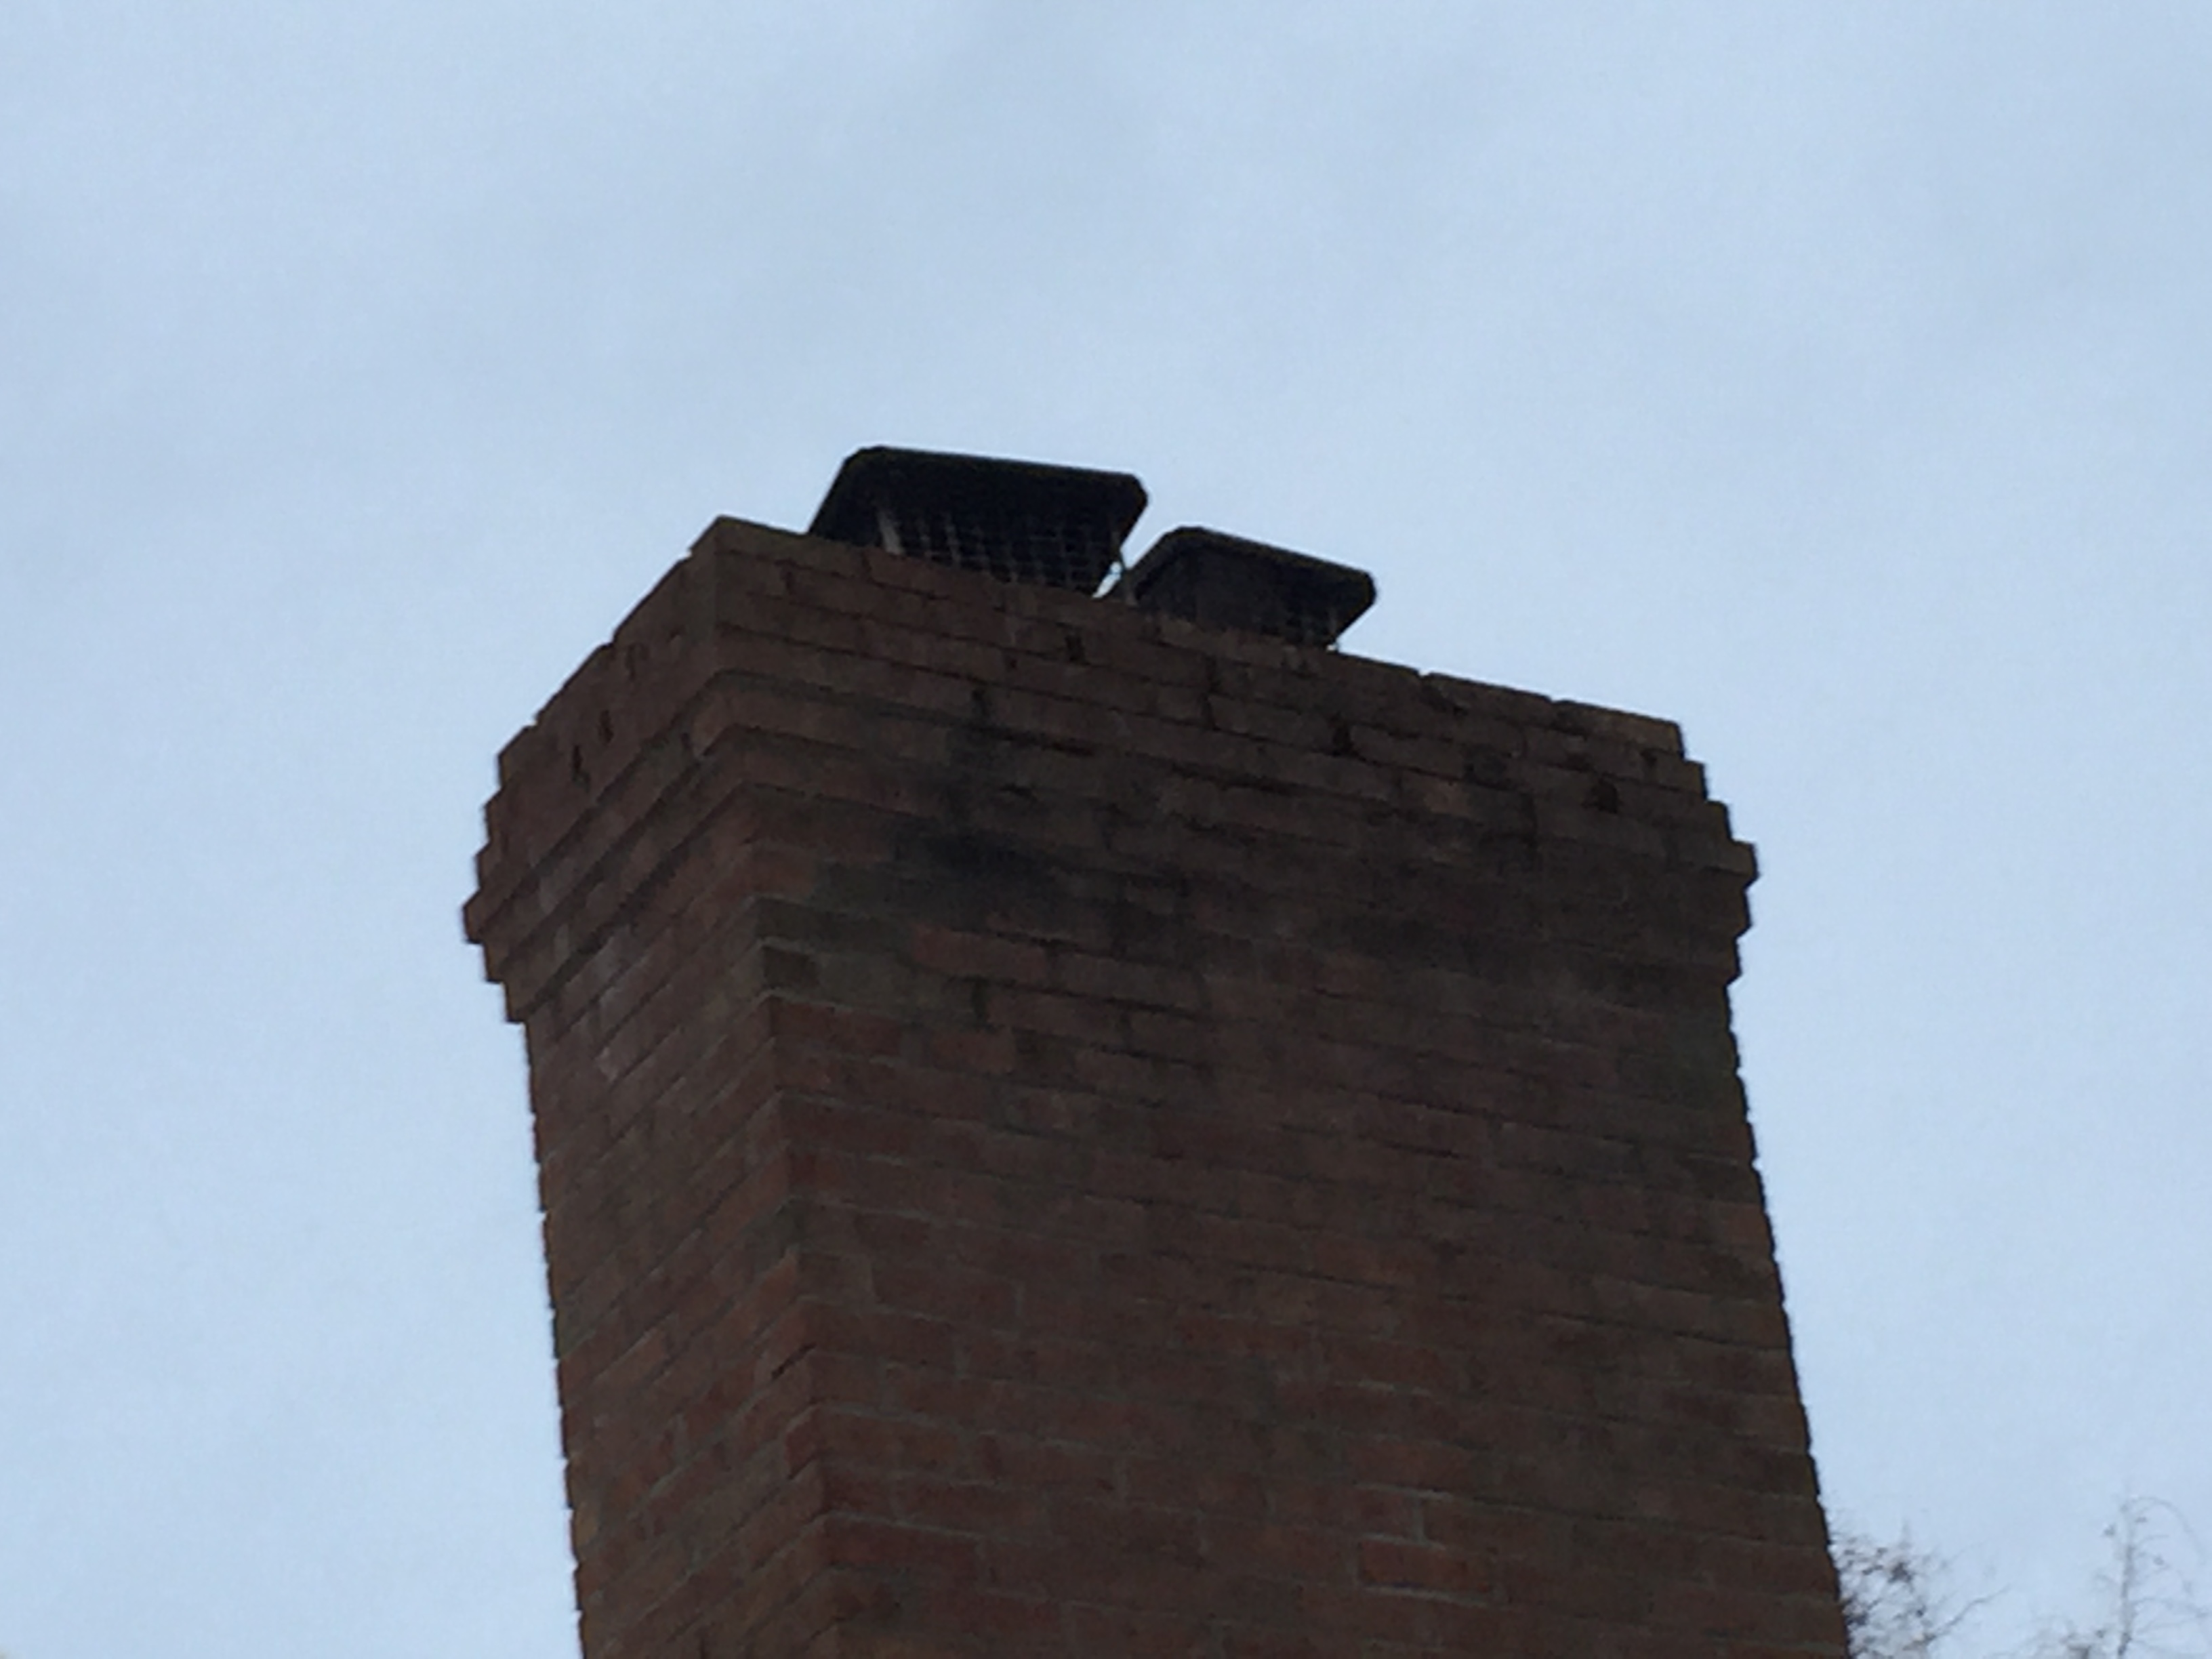 Need help identifying these vertical bricks on my chimney